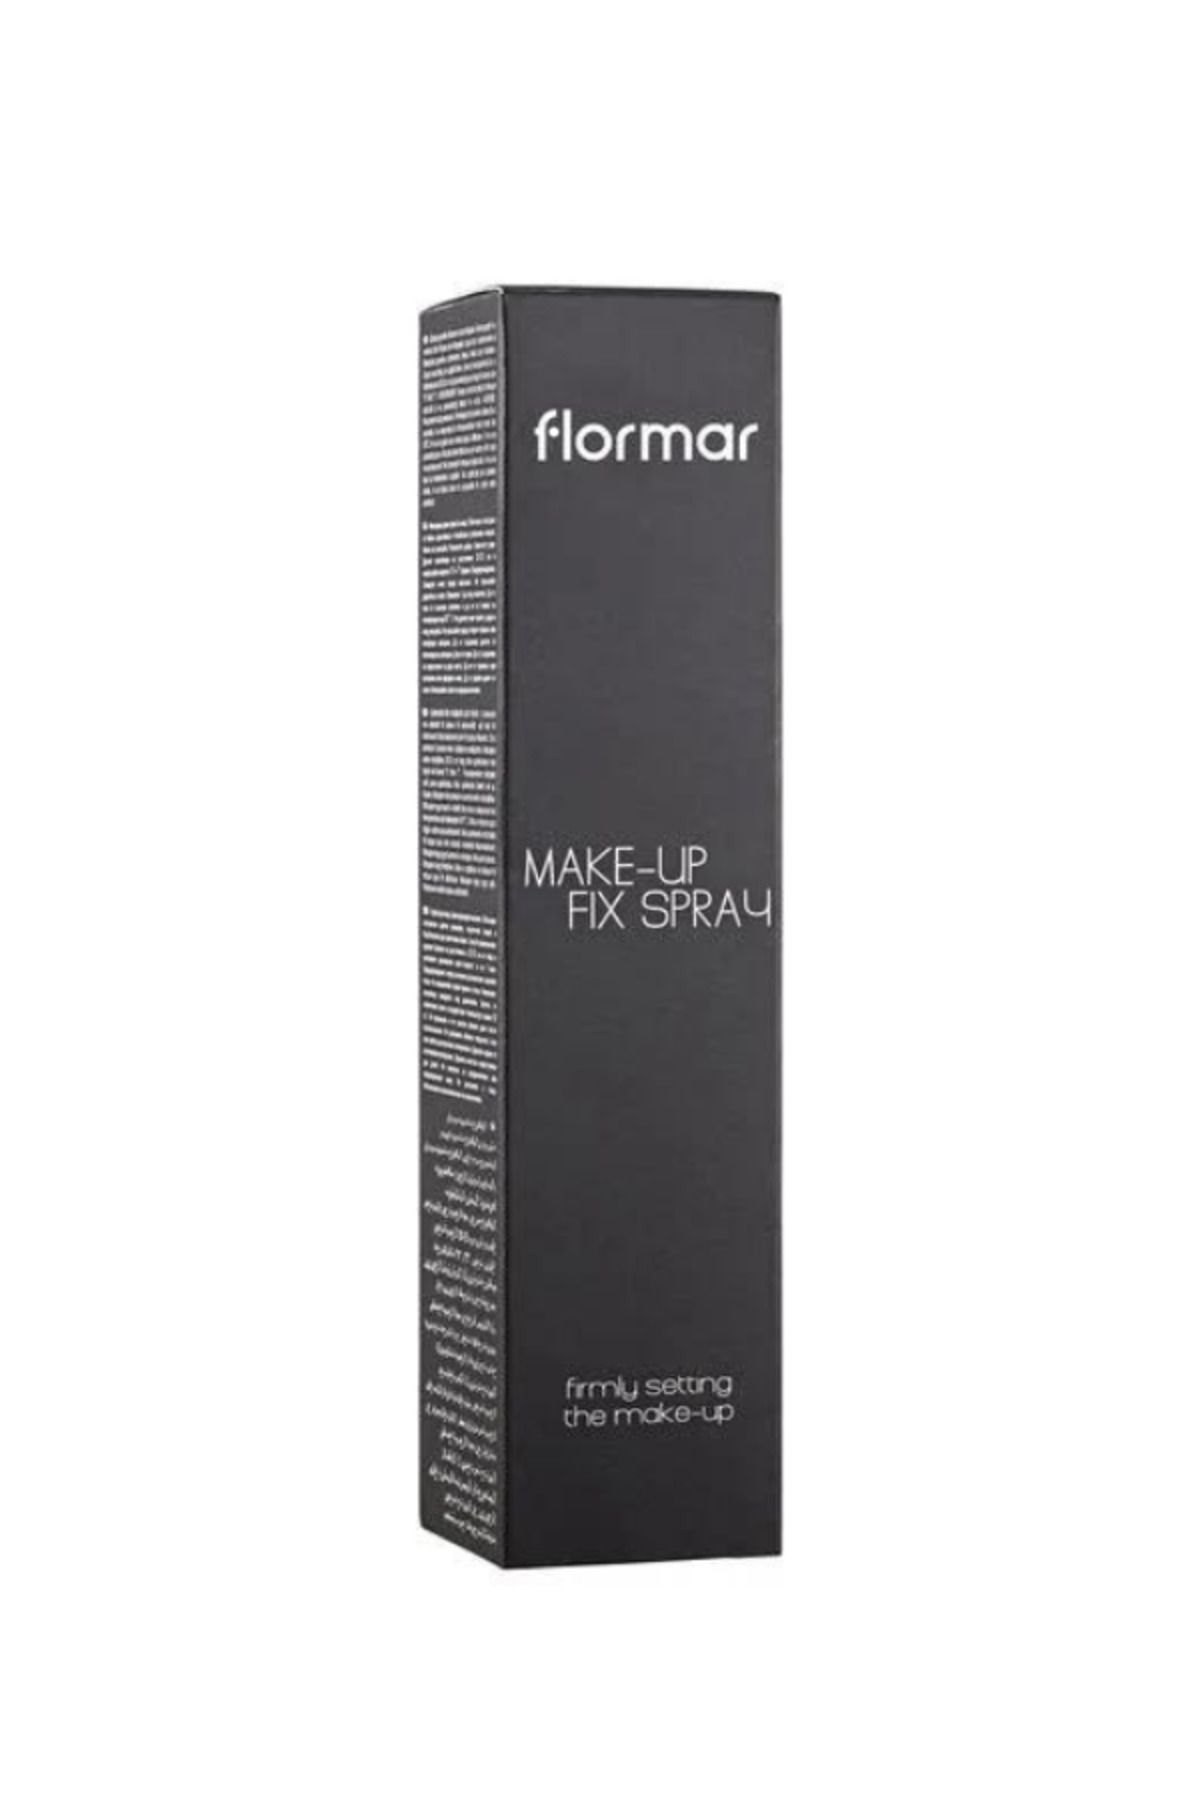 Flormar استون و خیار آب پایانی اسپری ثابت کننده آرایش با تمام مات / اسپری ثابت کننده آرایش 001